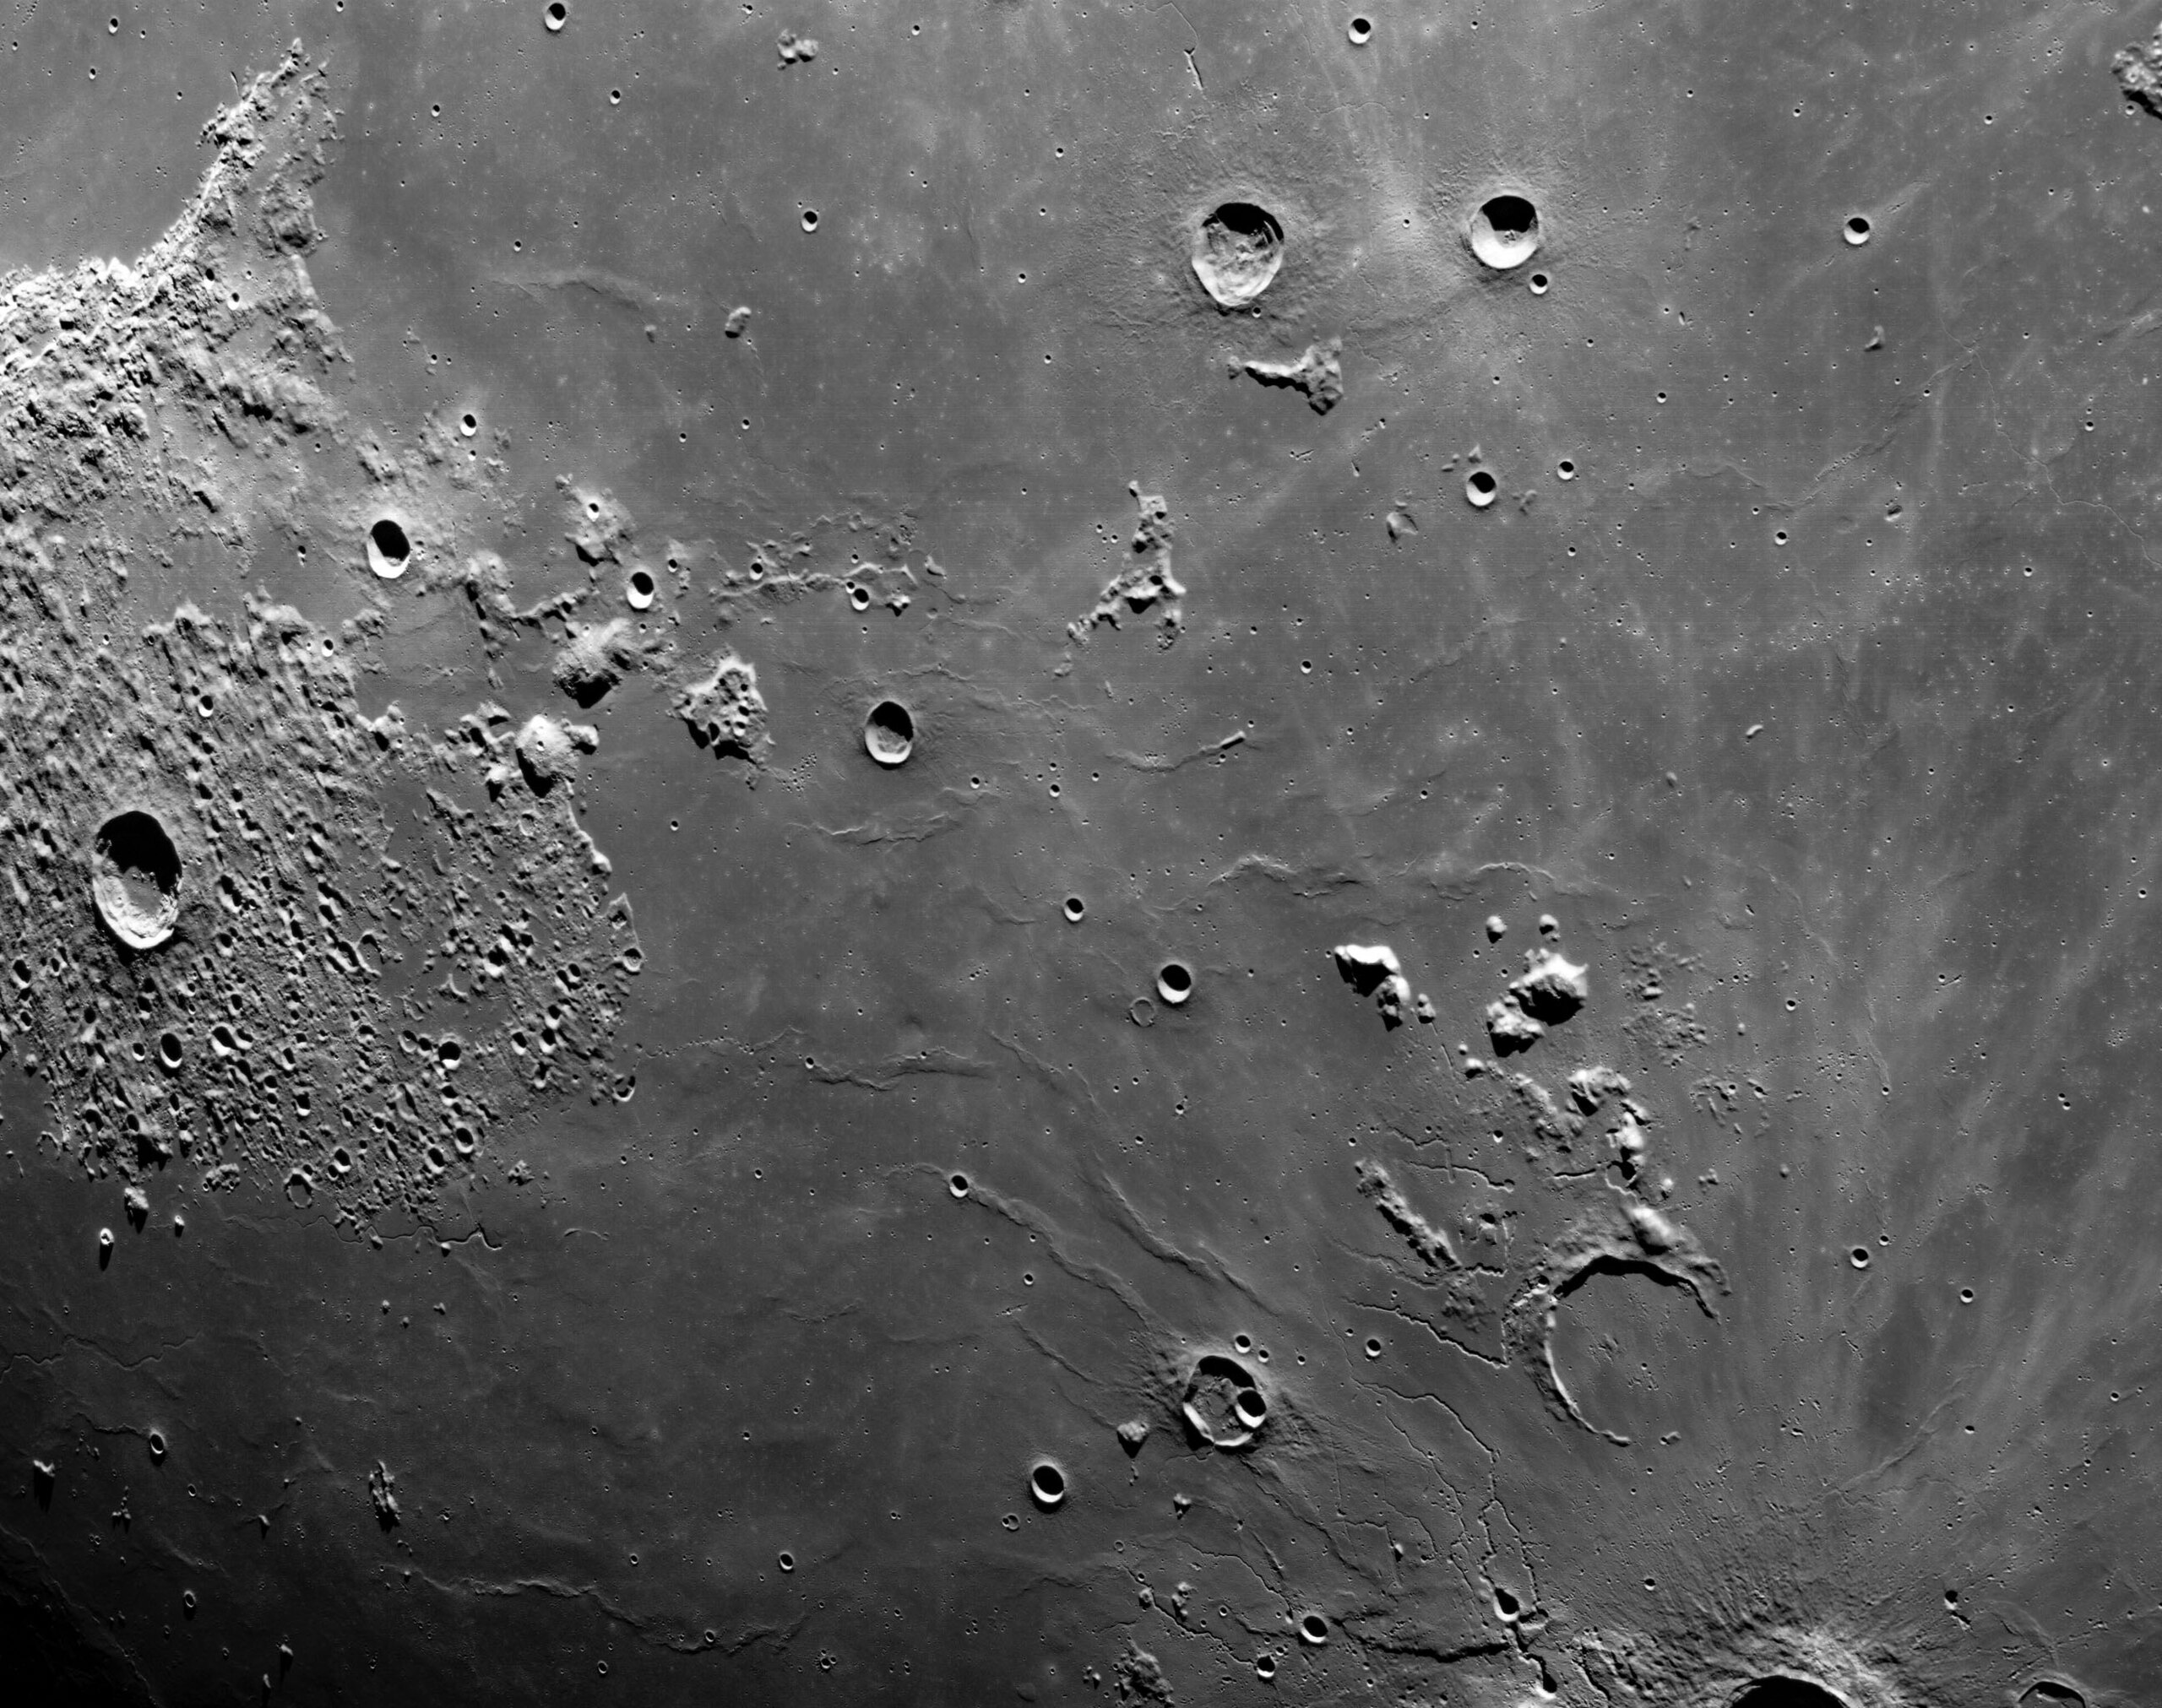 File:The lunar surface (art001e002162).jpeg - Wikipedia